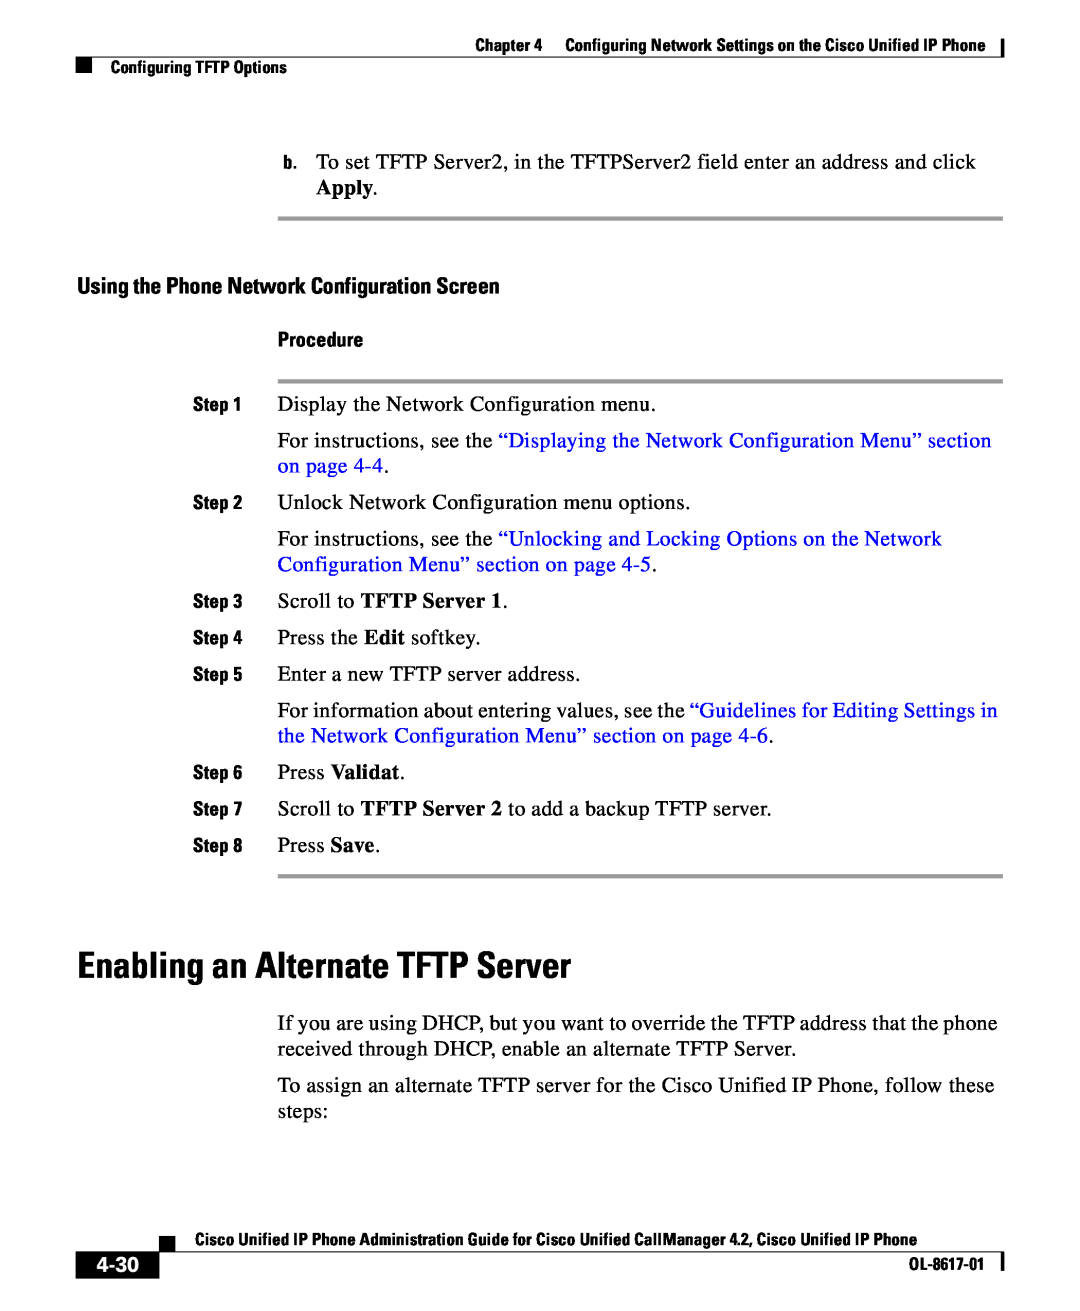 Cisco Systems 4.2 manual Enabling an Alternate TFTP Server, Scroll to TFTP Server, 4-30, Procedure 